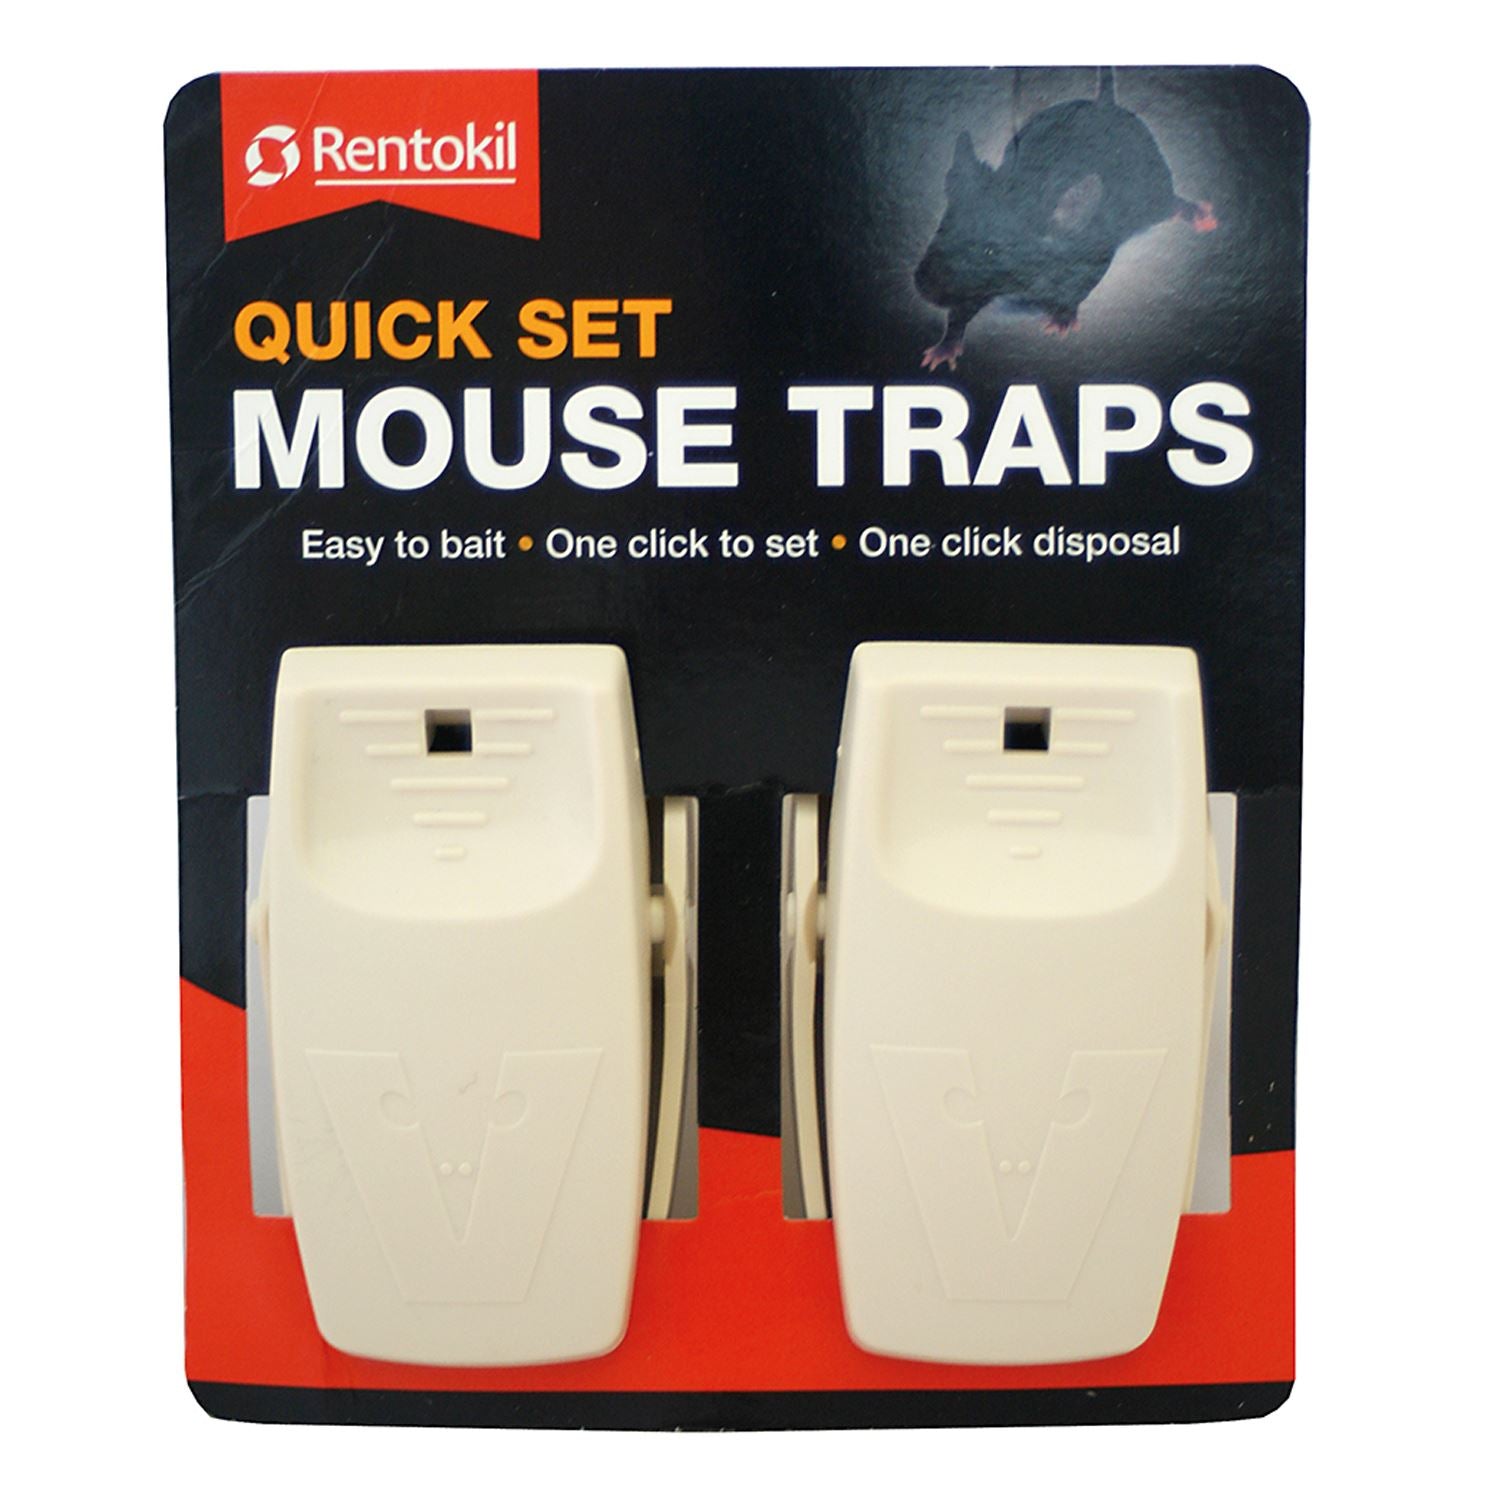 Rentokil Quick Set Mouse Trap - Just Horse Riders